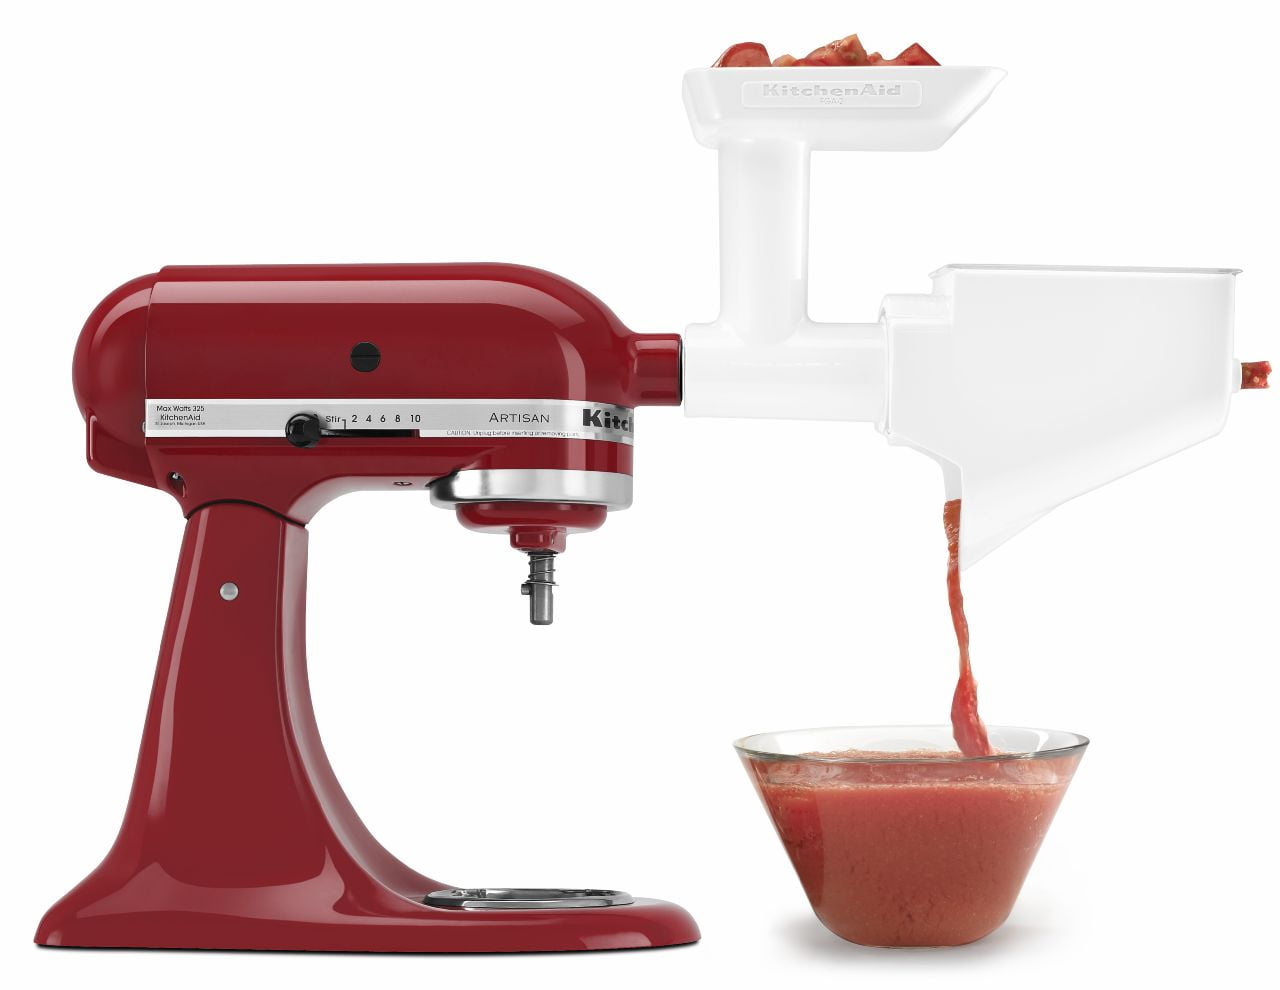 Tomato Juicer Attachment For KitchenAid Kitchen Aid Stand Mixer Accessory  USA